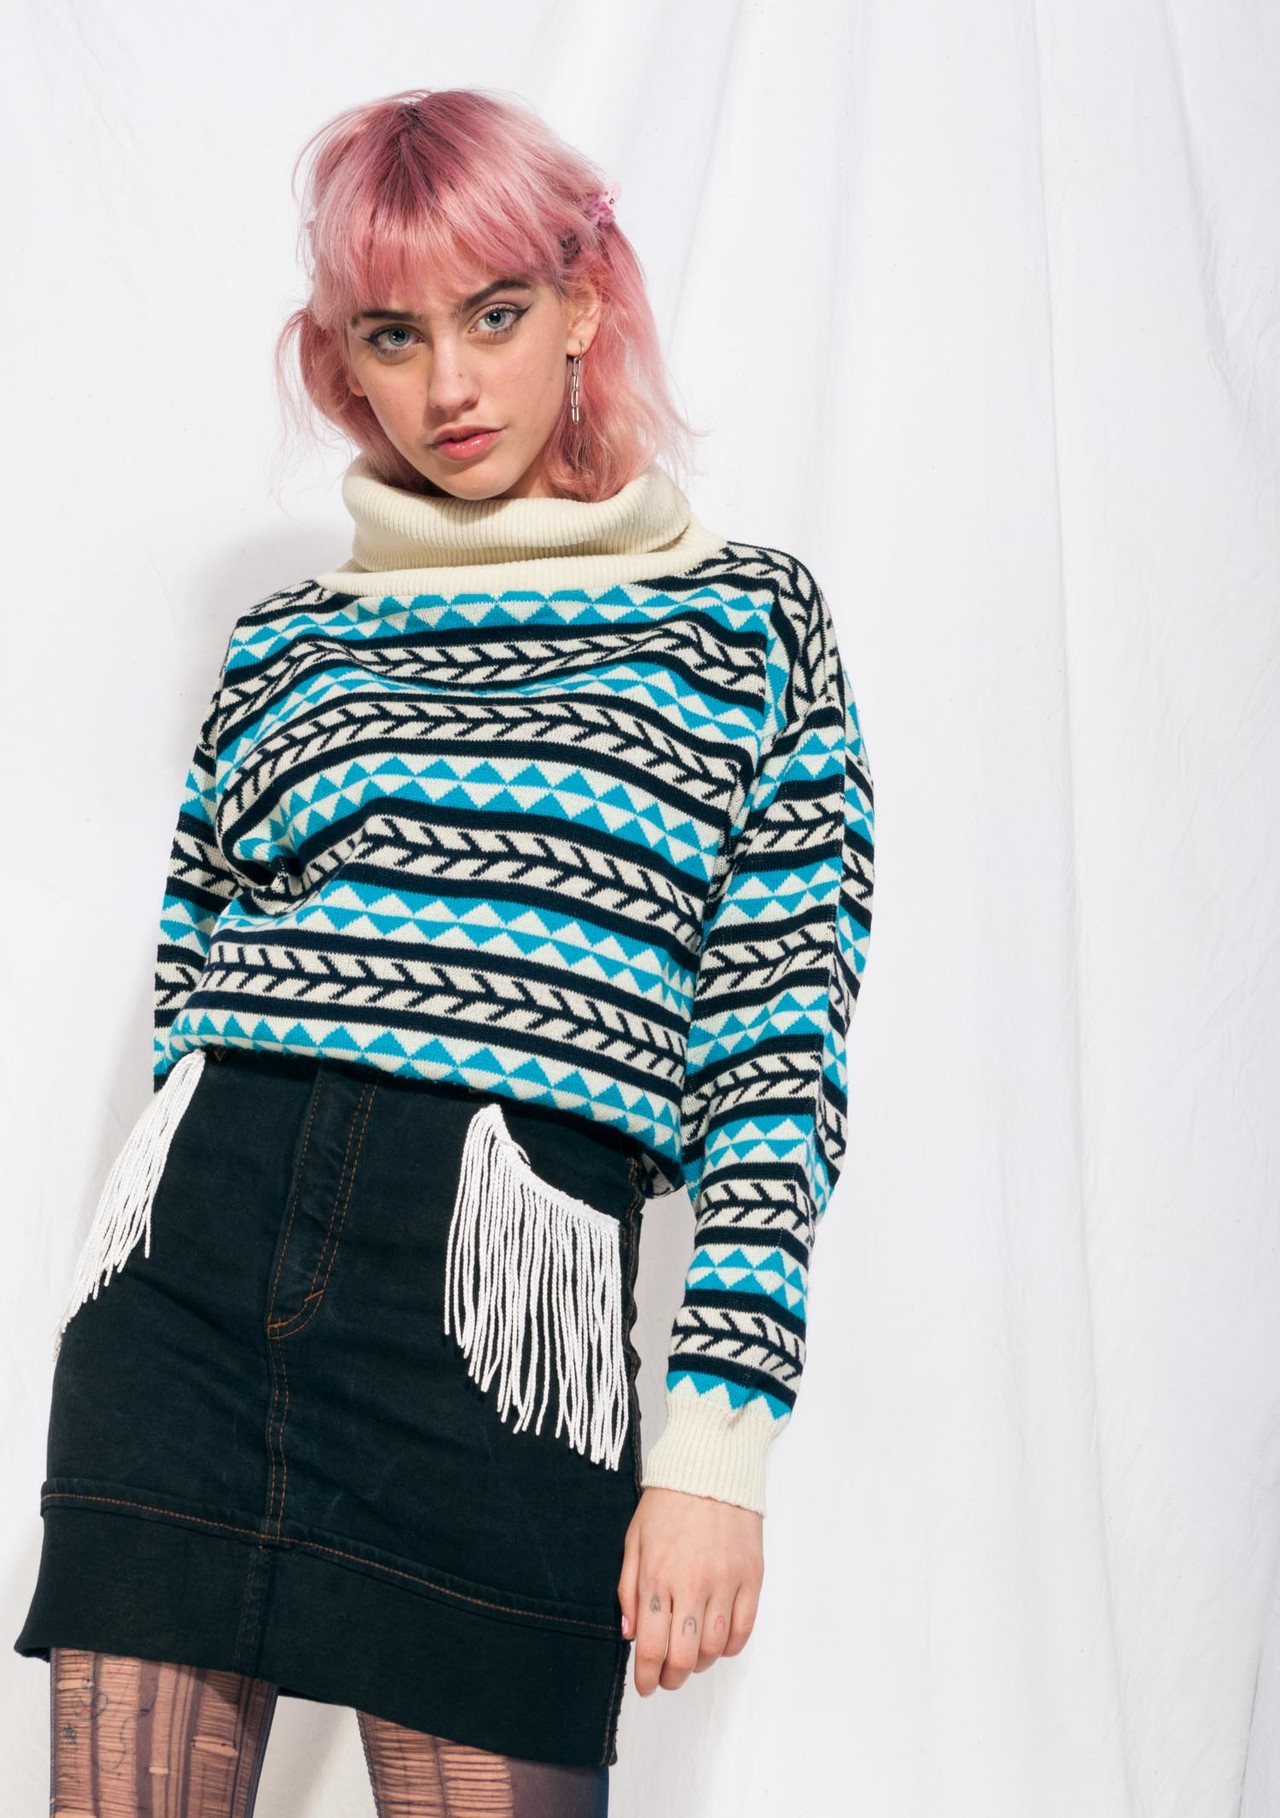 Vintage knit jumper 80s warm winter turtleneck sweater – Pop Sick Vintage